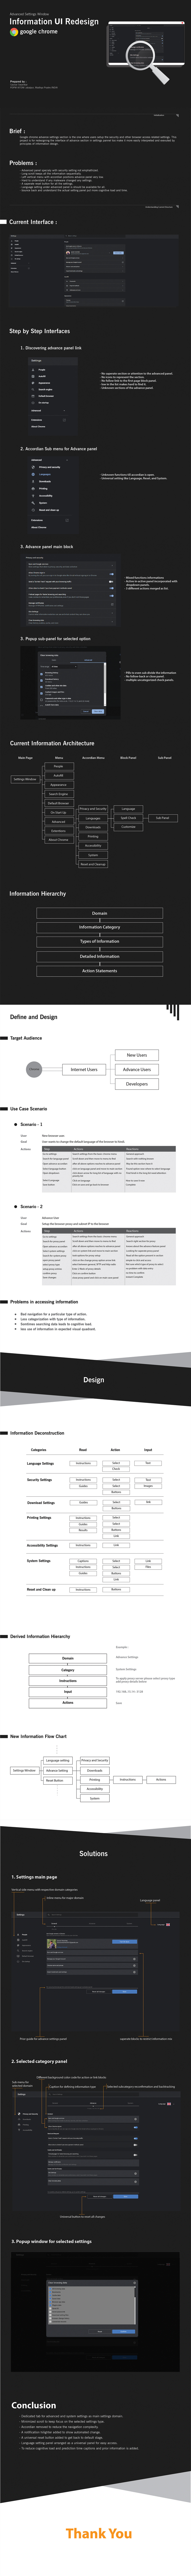 interface design ui design information design ux/ui Figma Illustrator photoshop redesign concept Project